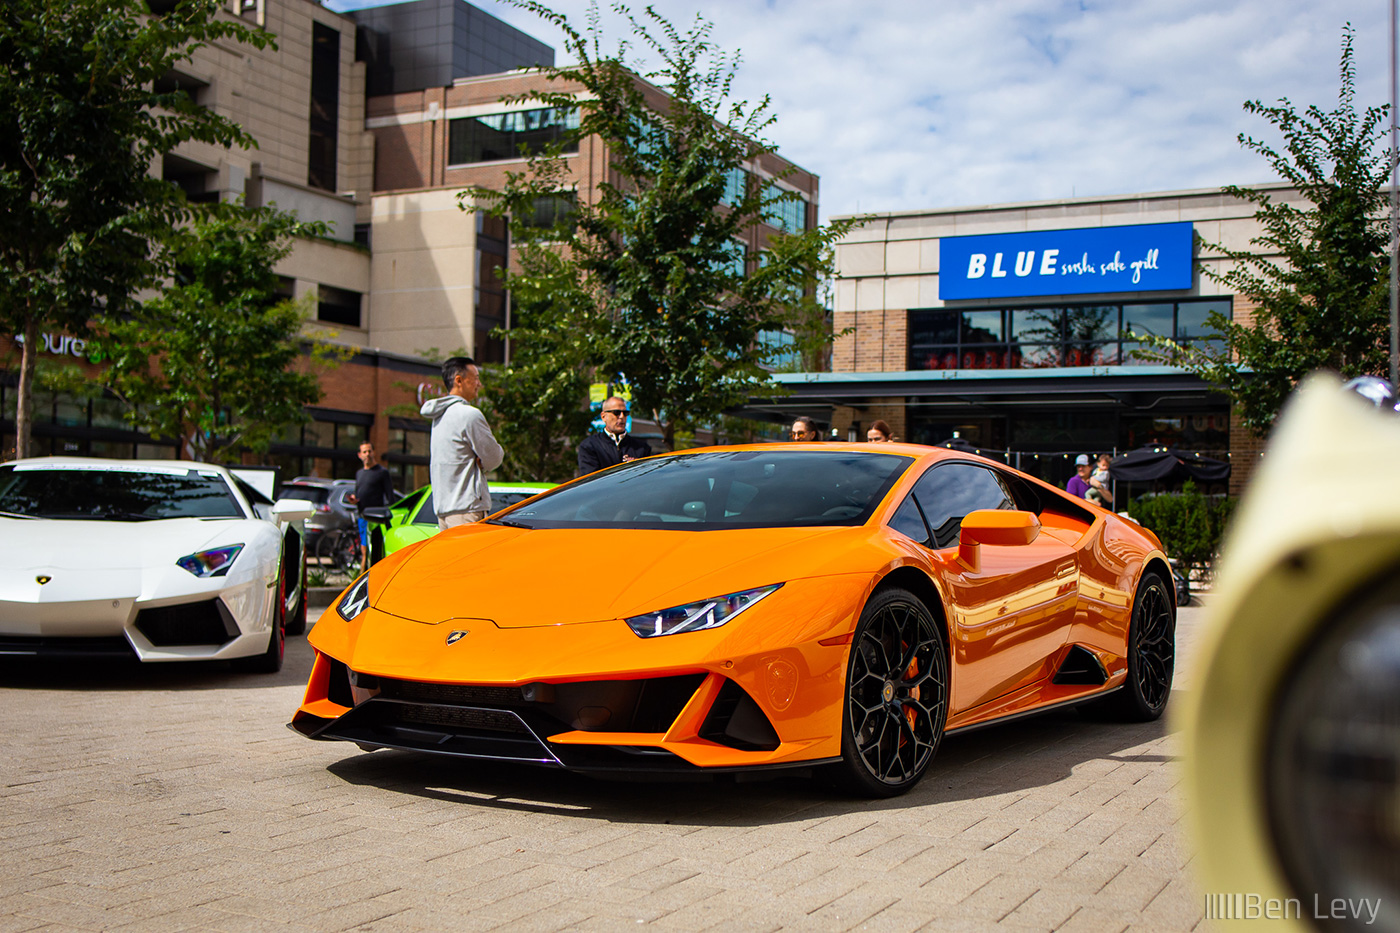 Orange Lamborghini Huracan at the plaza at Lincoln Common